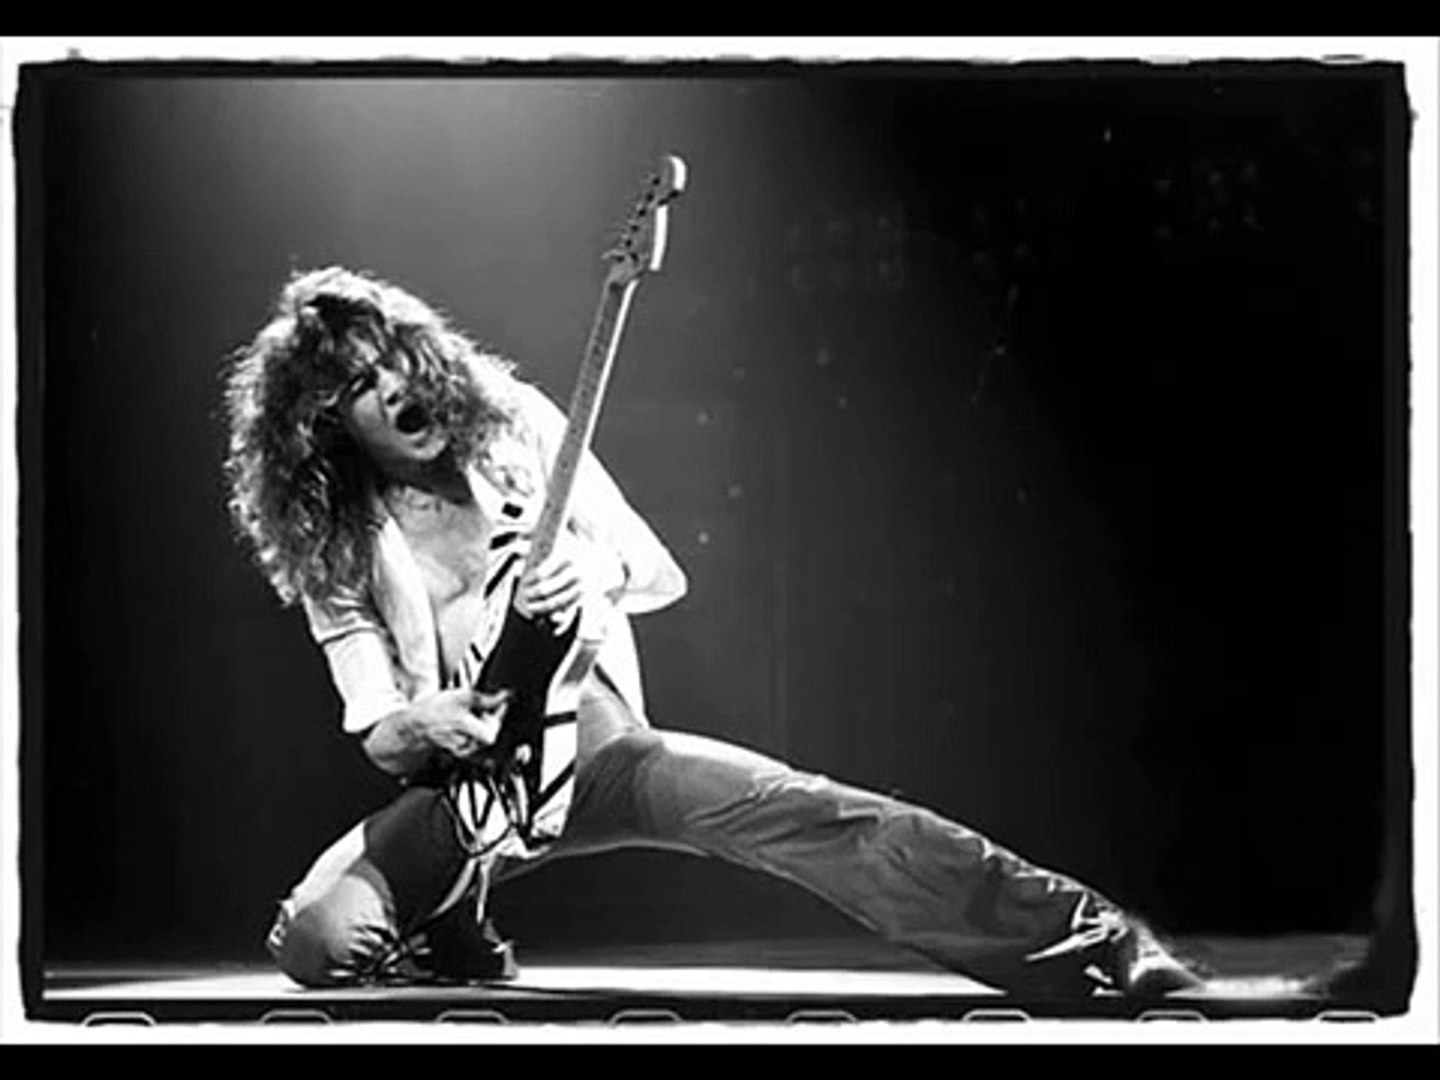 Eddie Van Halen - Top Gun Theme - video Dailymotion